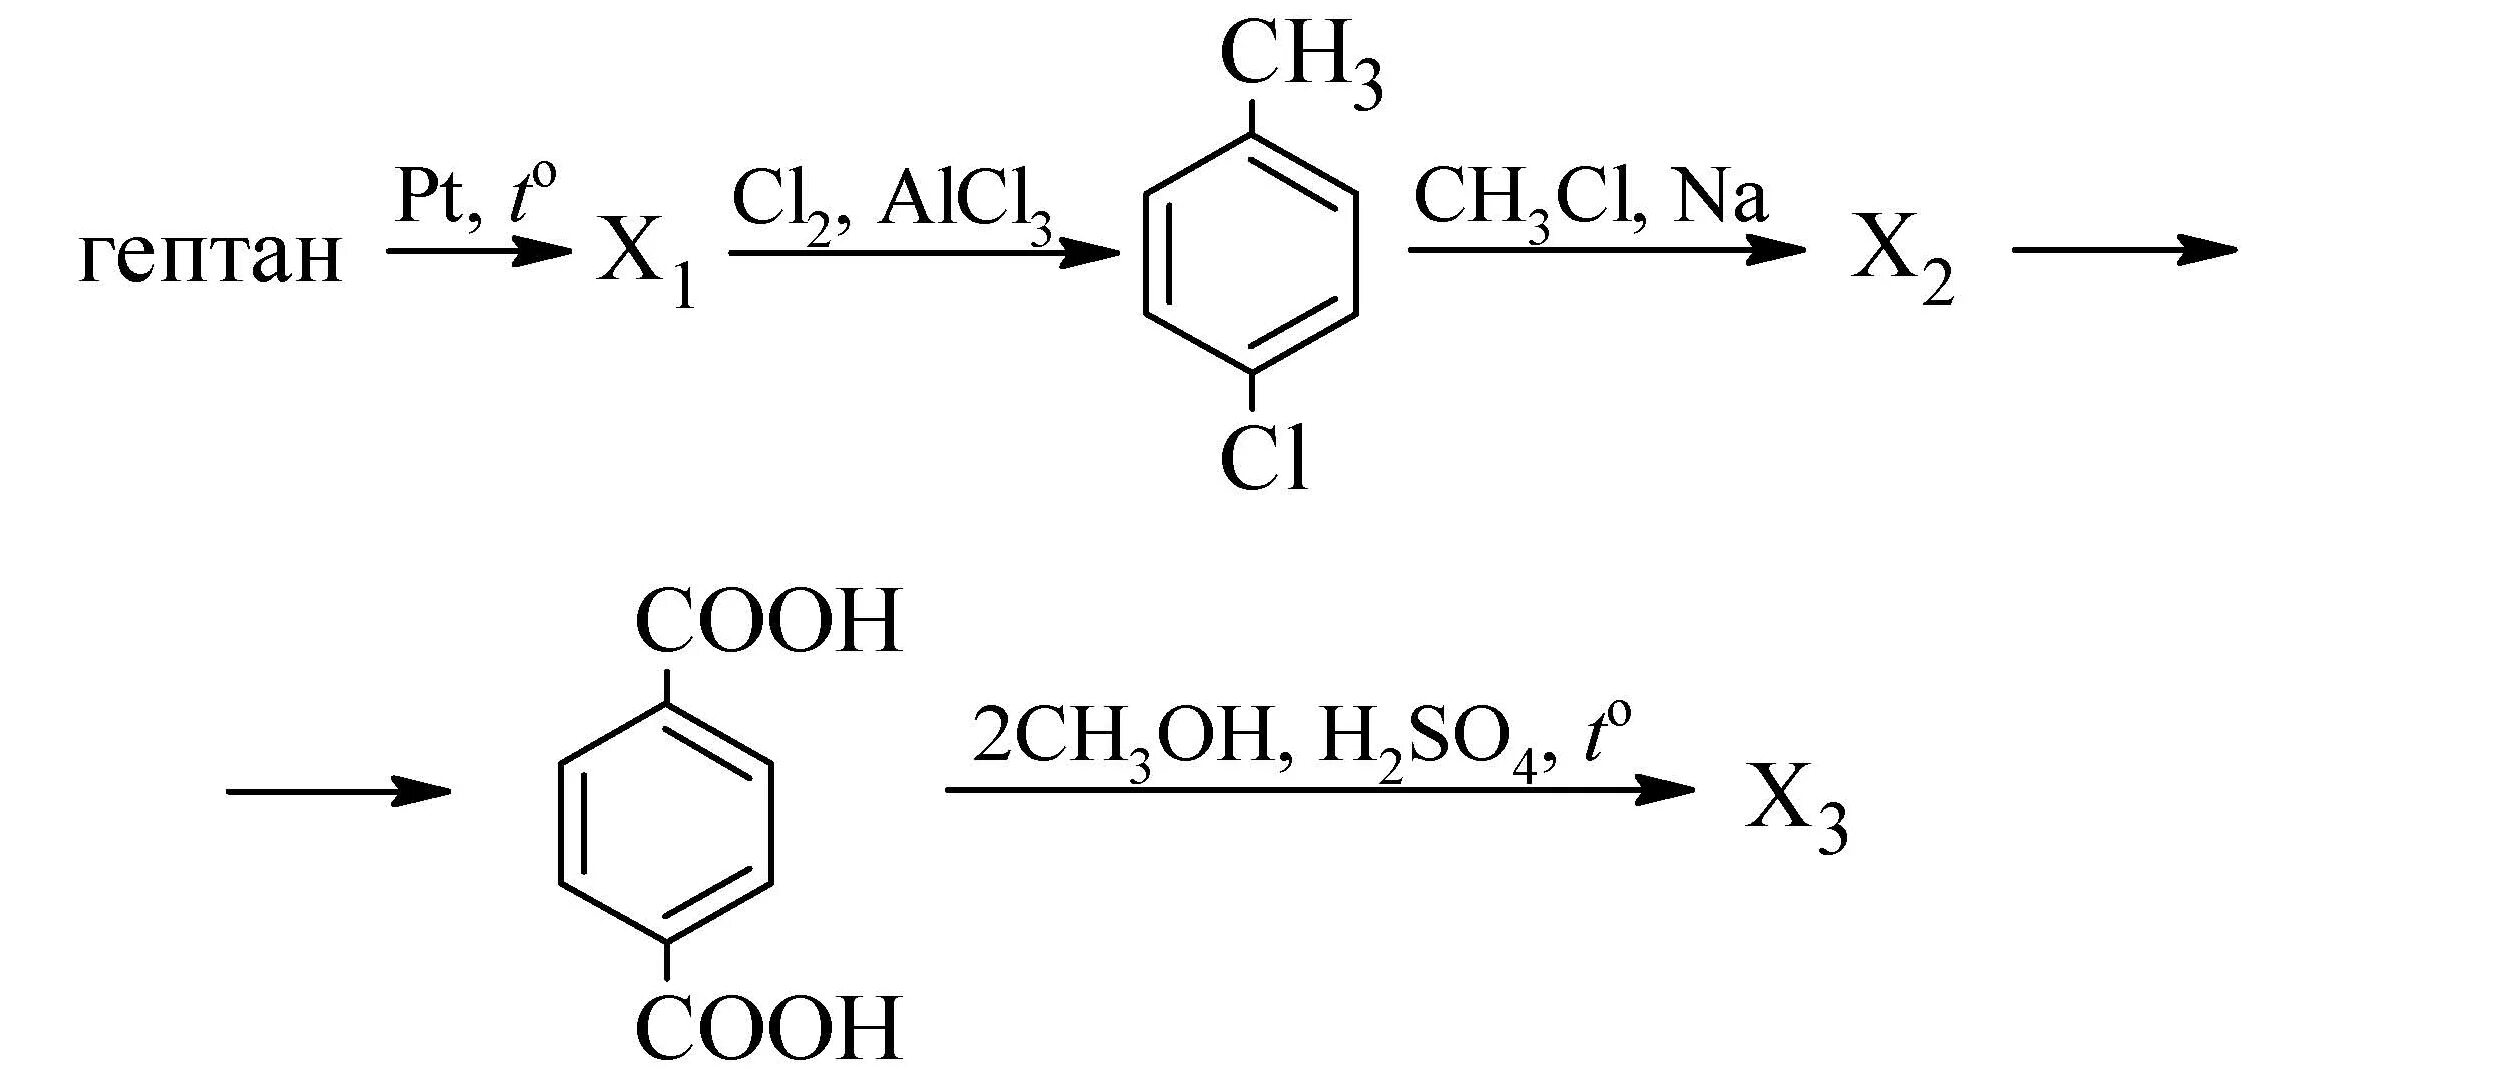 Гептан pt t реакция. Гептан pt t x1 cl2. Цепочки реакций бензол. Цепочки превращения органических веществ. Alcl3 h2so4 реакция